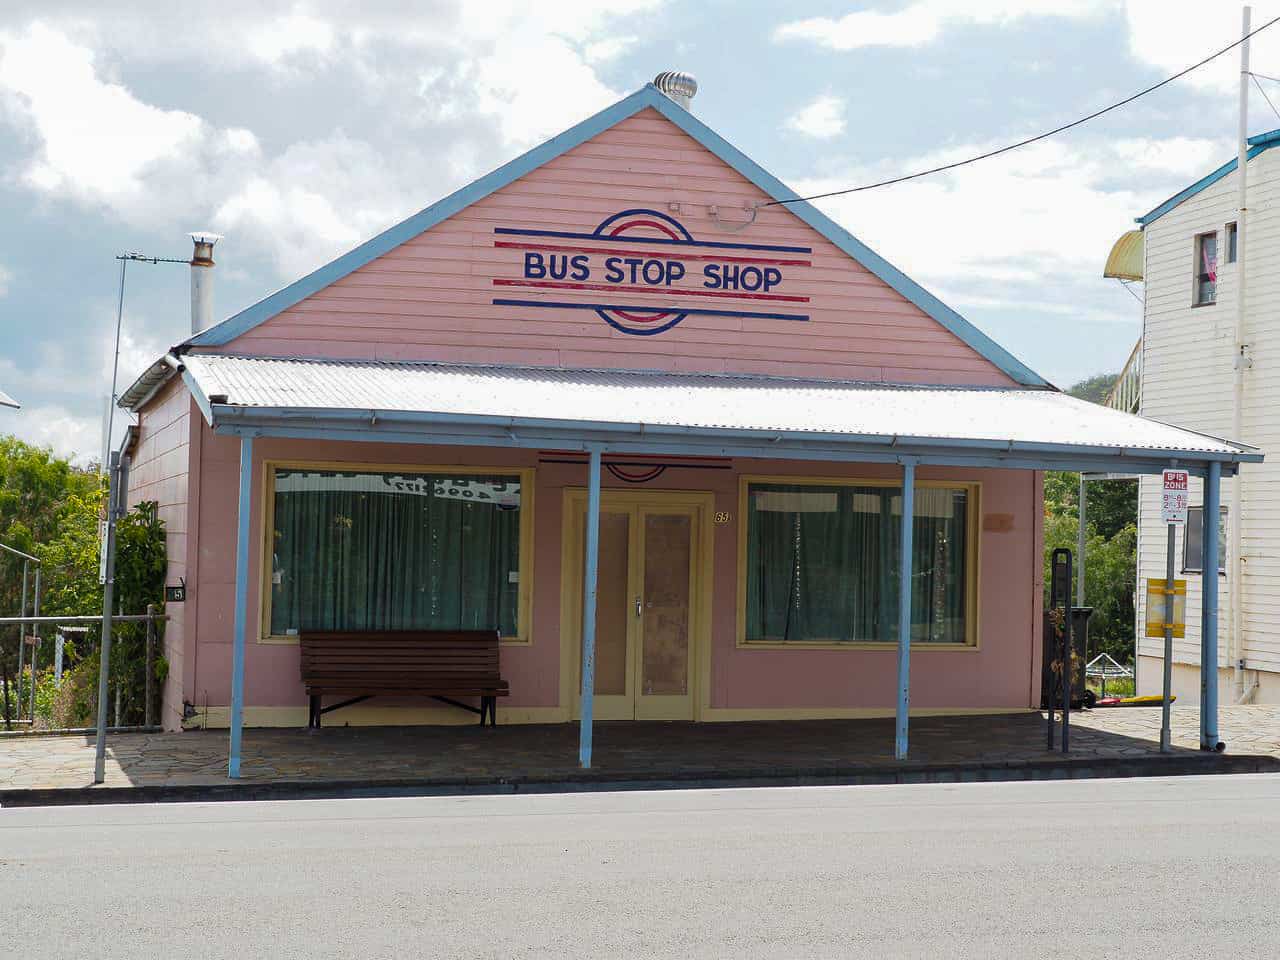 The Bus Stop Shop in Herberton, North Queensland // TravelMermaid.com